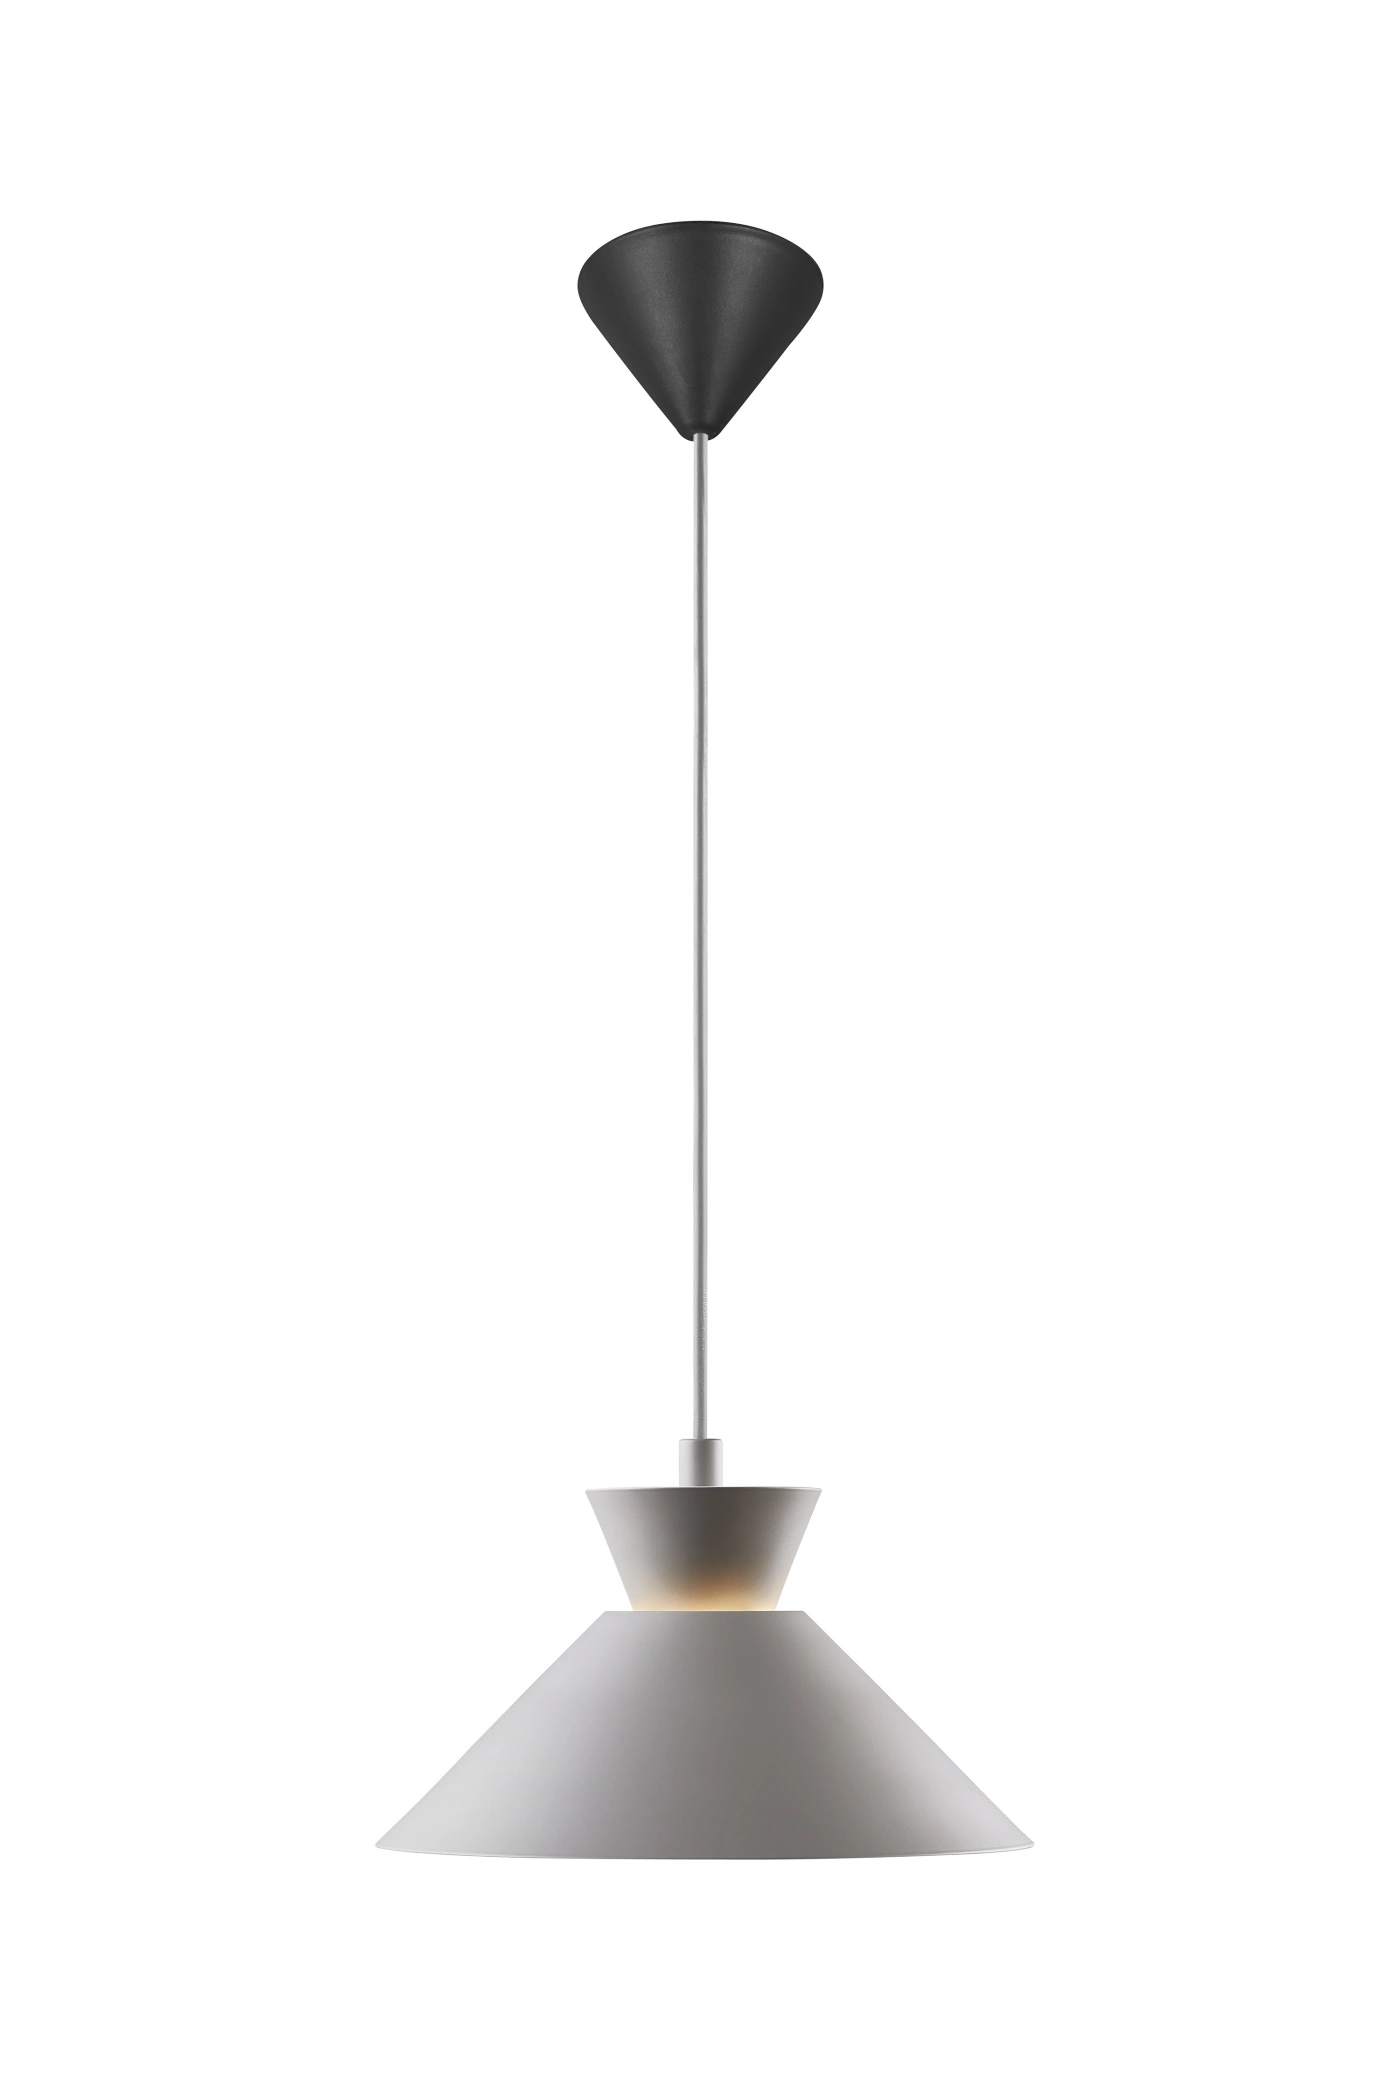   
                        
                        Люстра NORDLUX (Дания) 51186    
                         в стиле Модерн, Скандинавский.  
                        Тип источника света: светодиодная лампа, сменная.                         Форма: Круг.                         Цвета плафонов и подвесок: Серый.                         Материал: Металл.                          фото 2